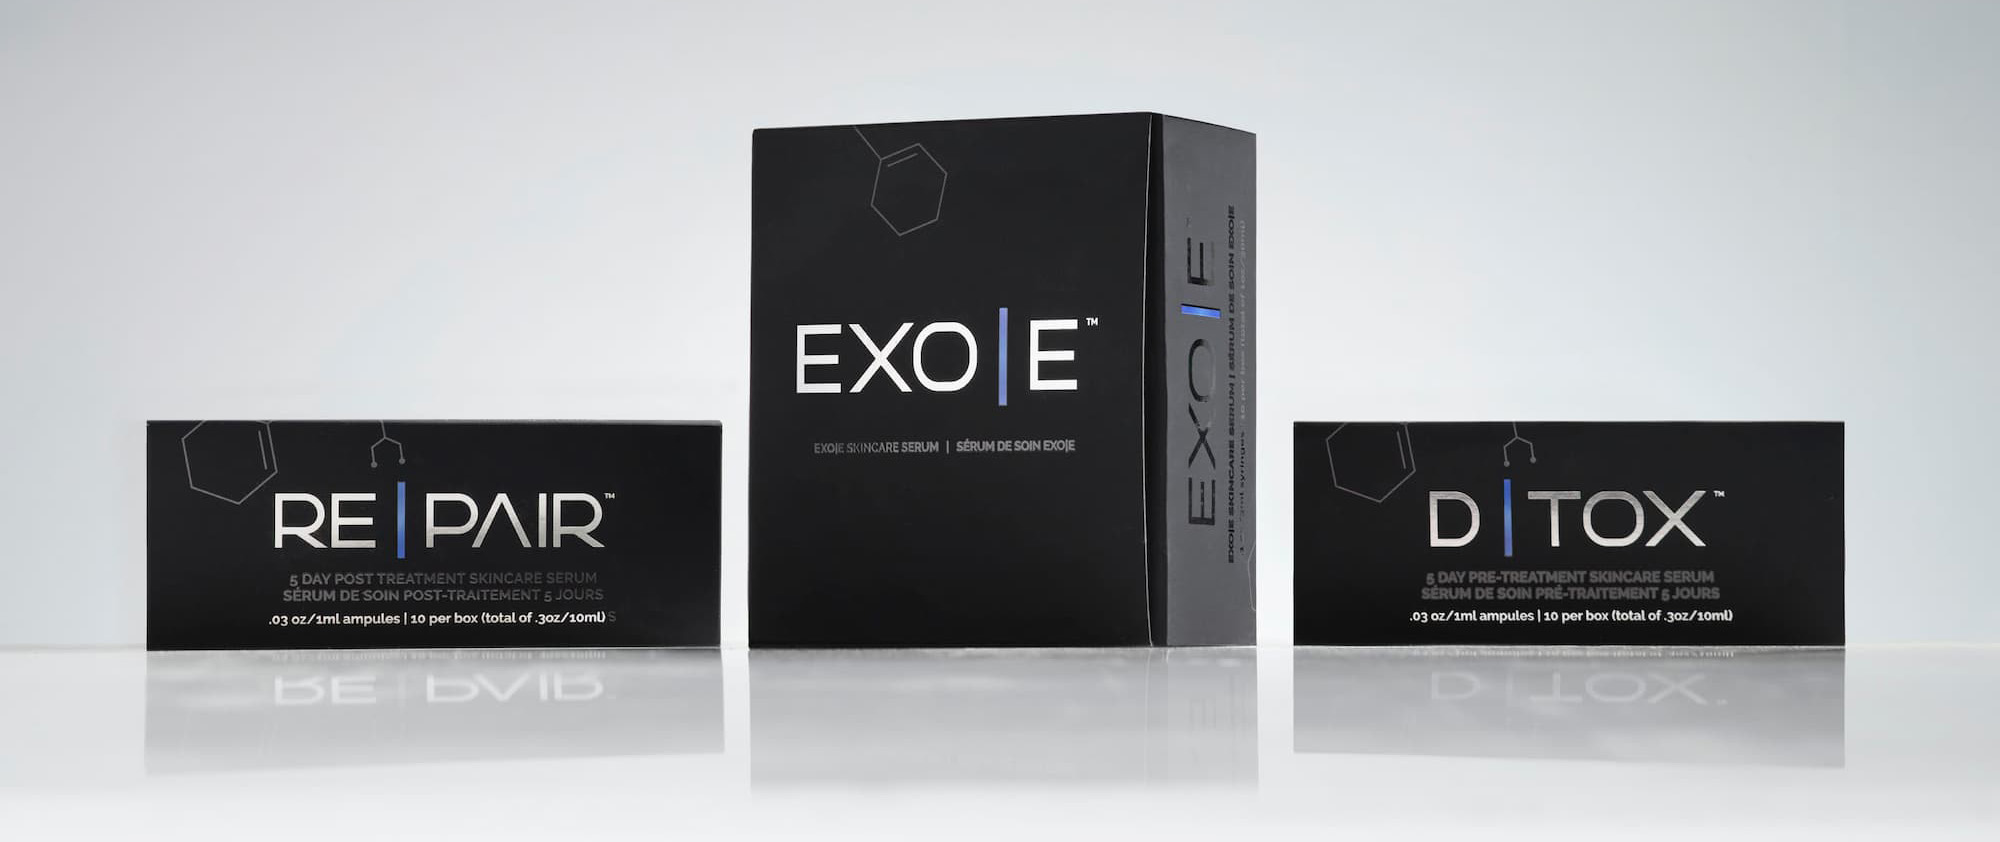 Exoe product line